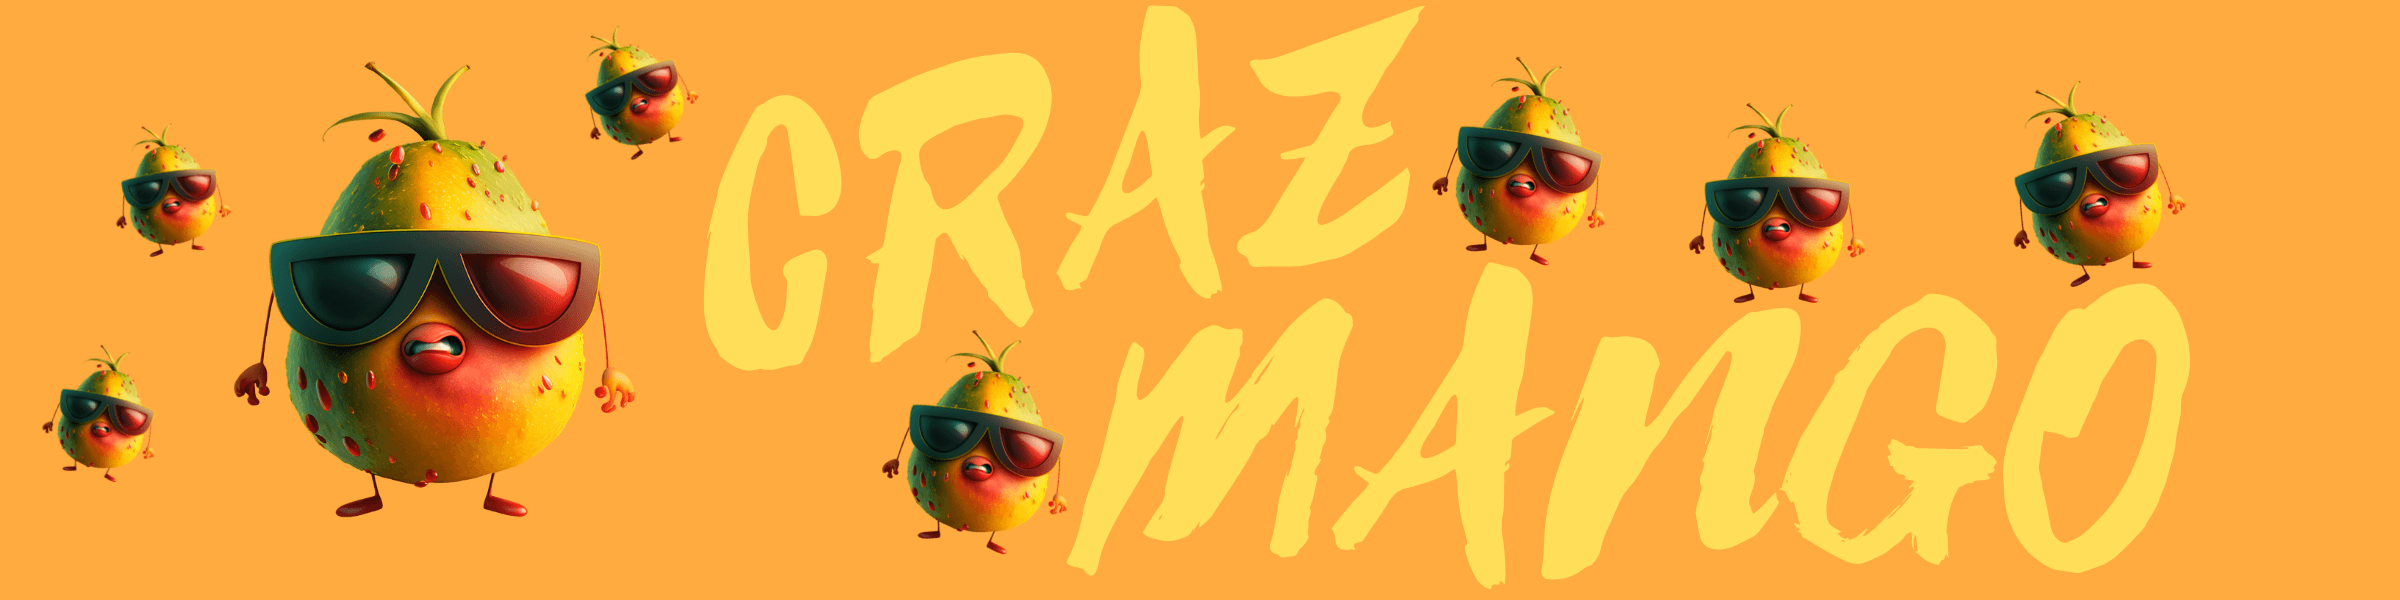 craz-mango バナー